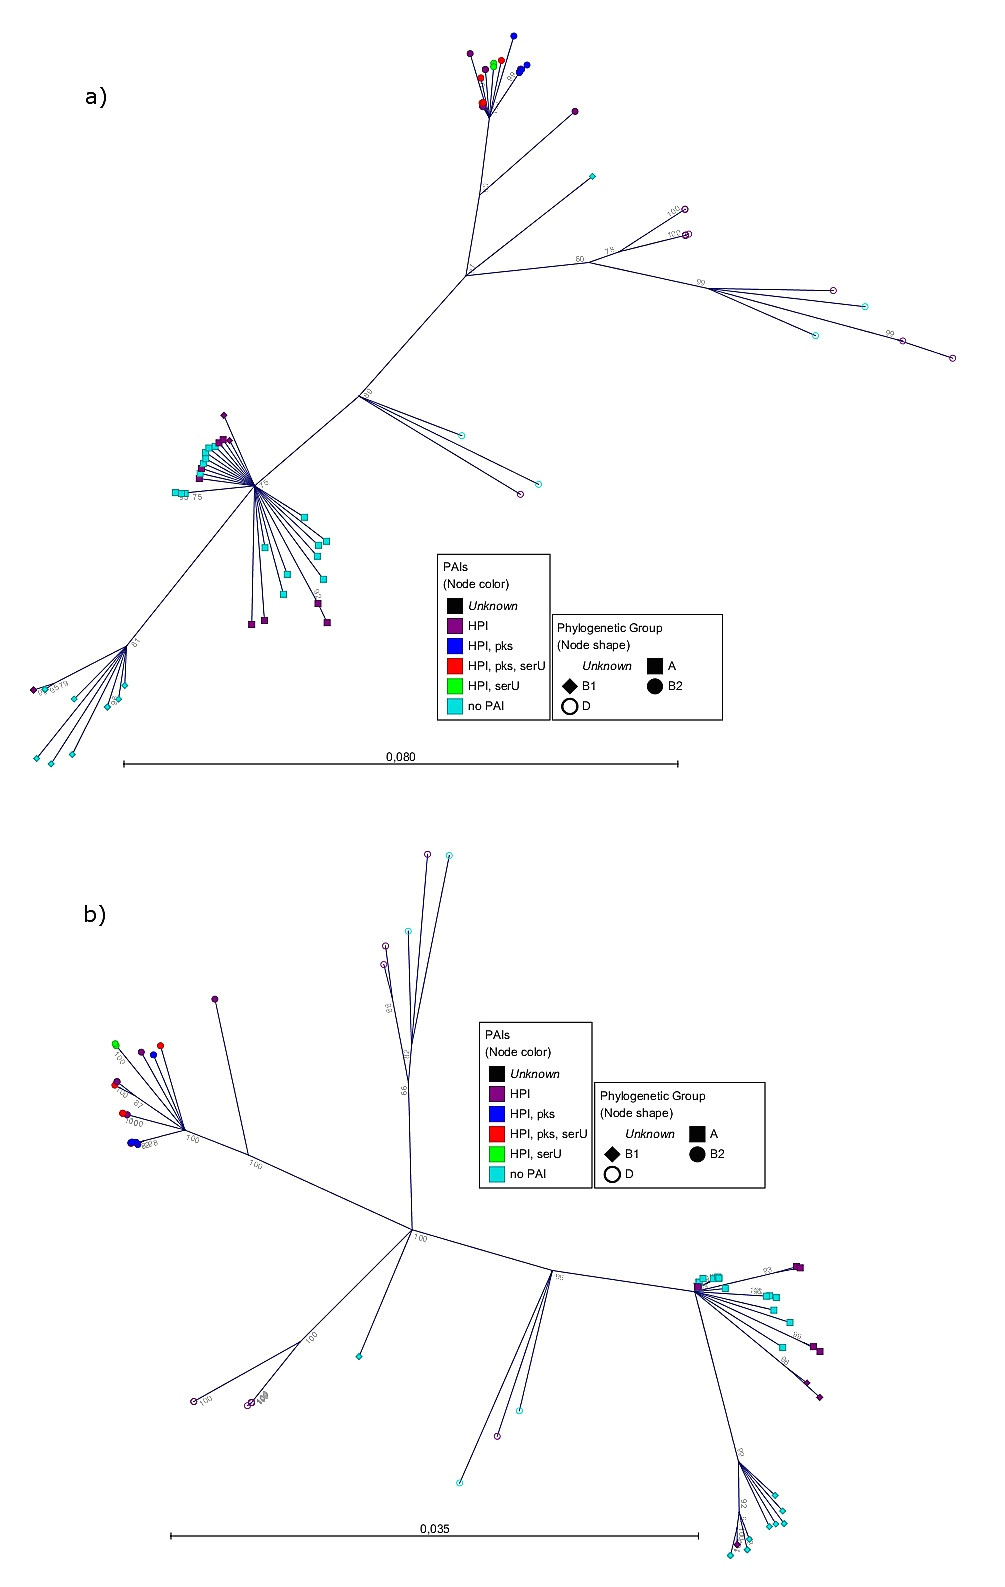 radial tree of the six housekeeping gene fragments